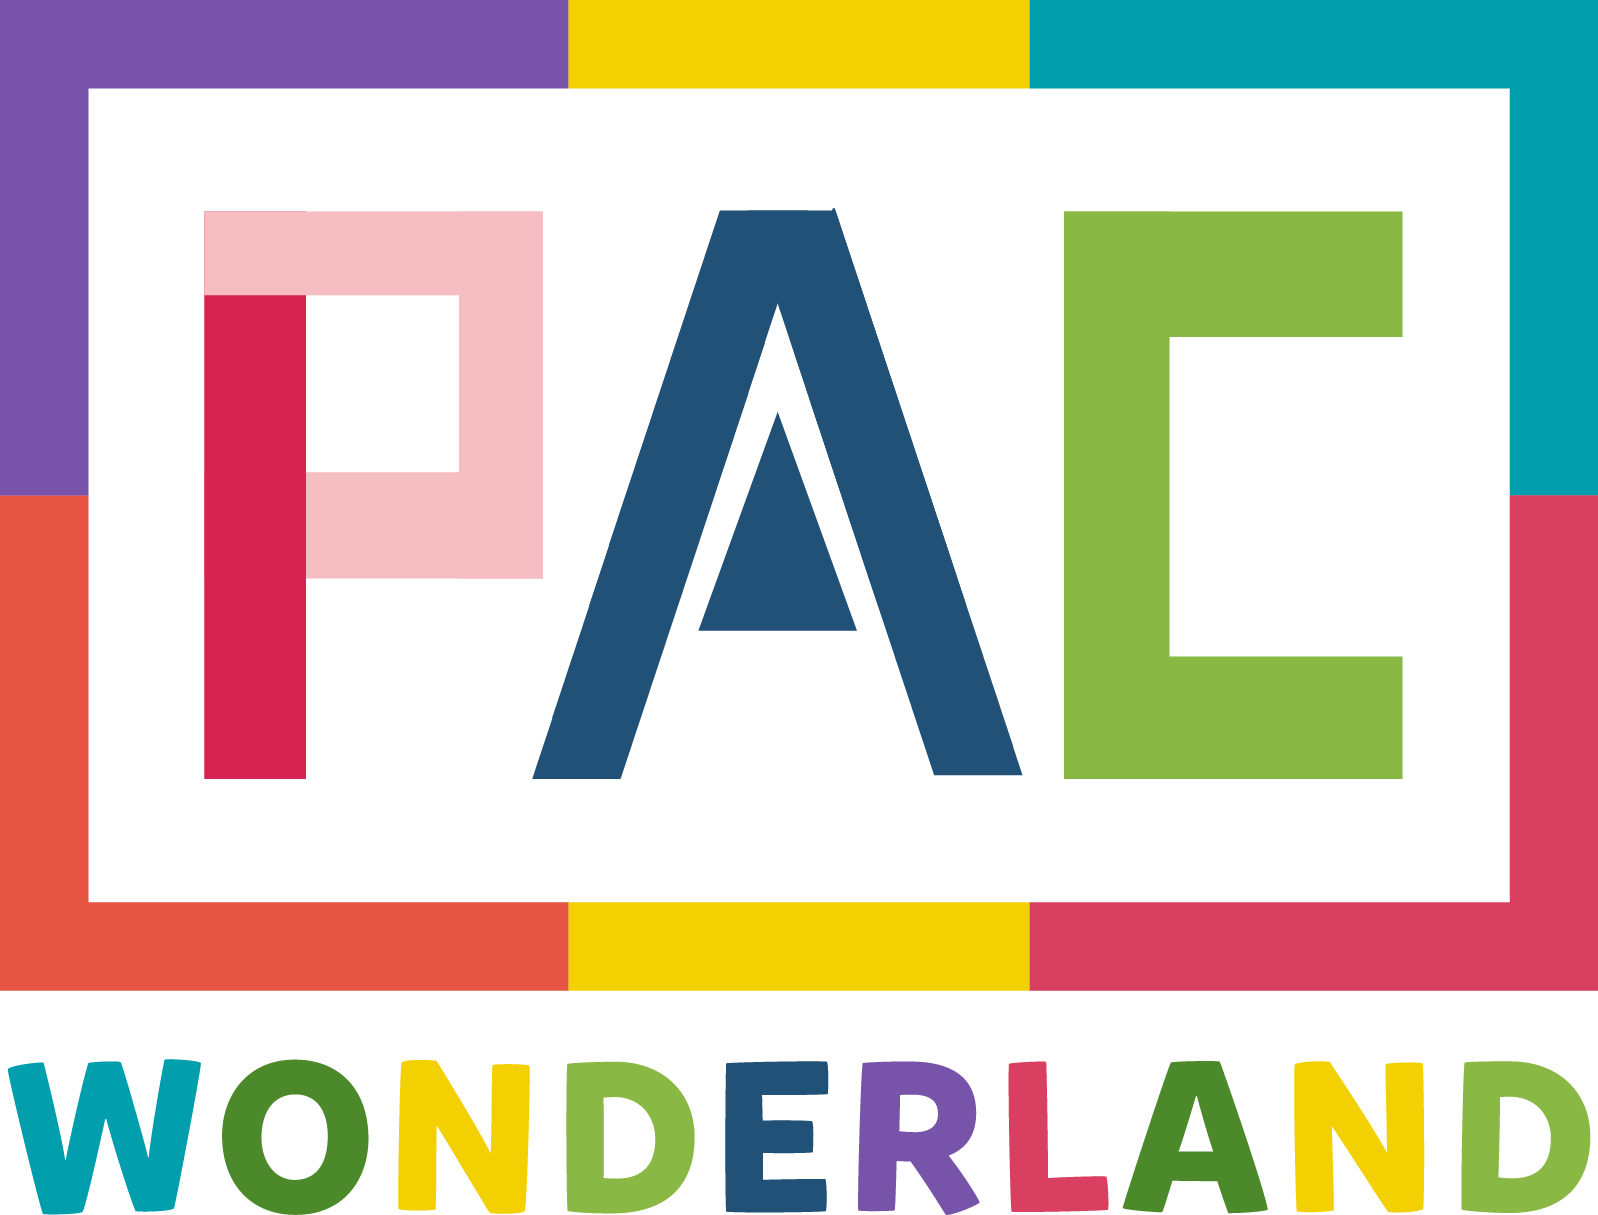 PAC Wonderland